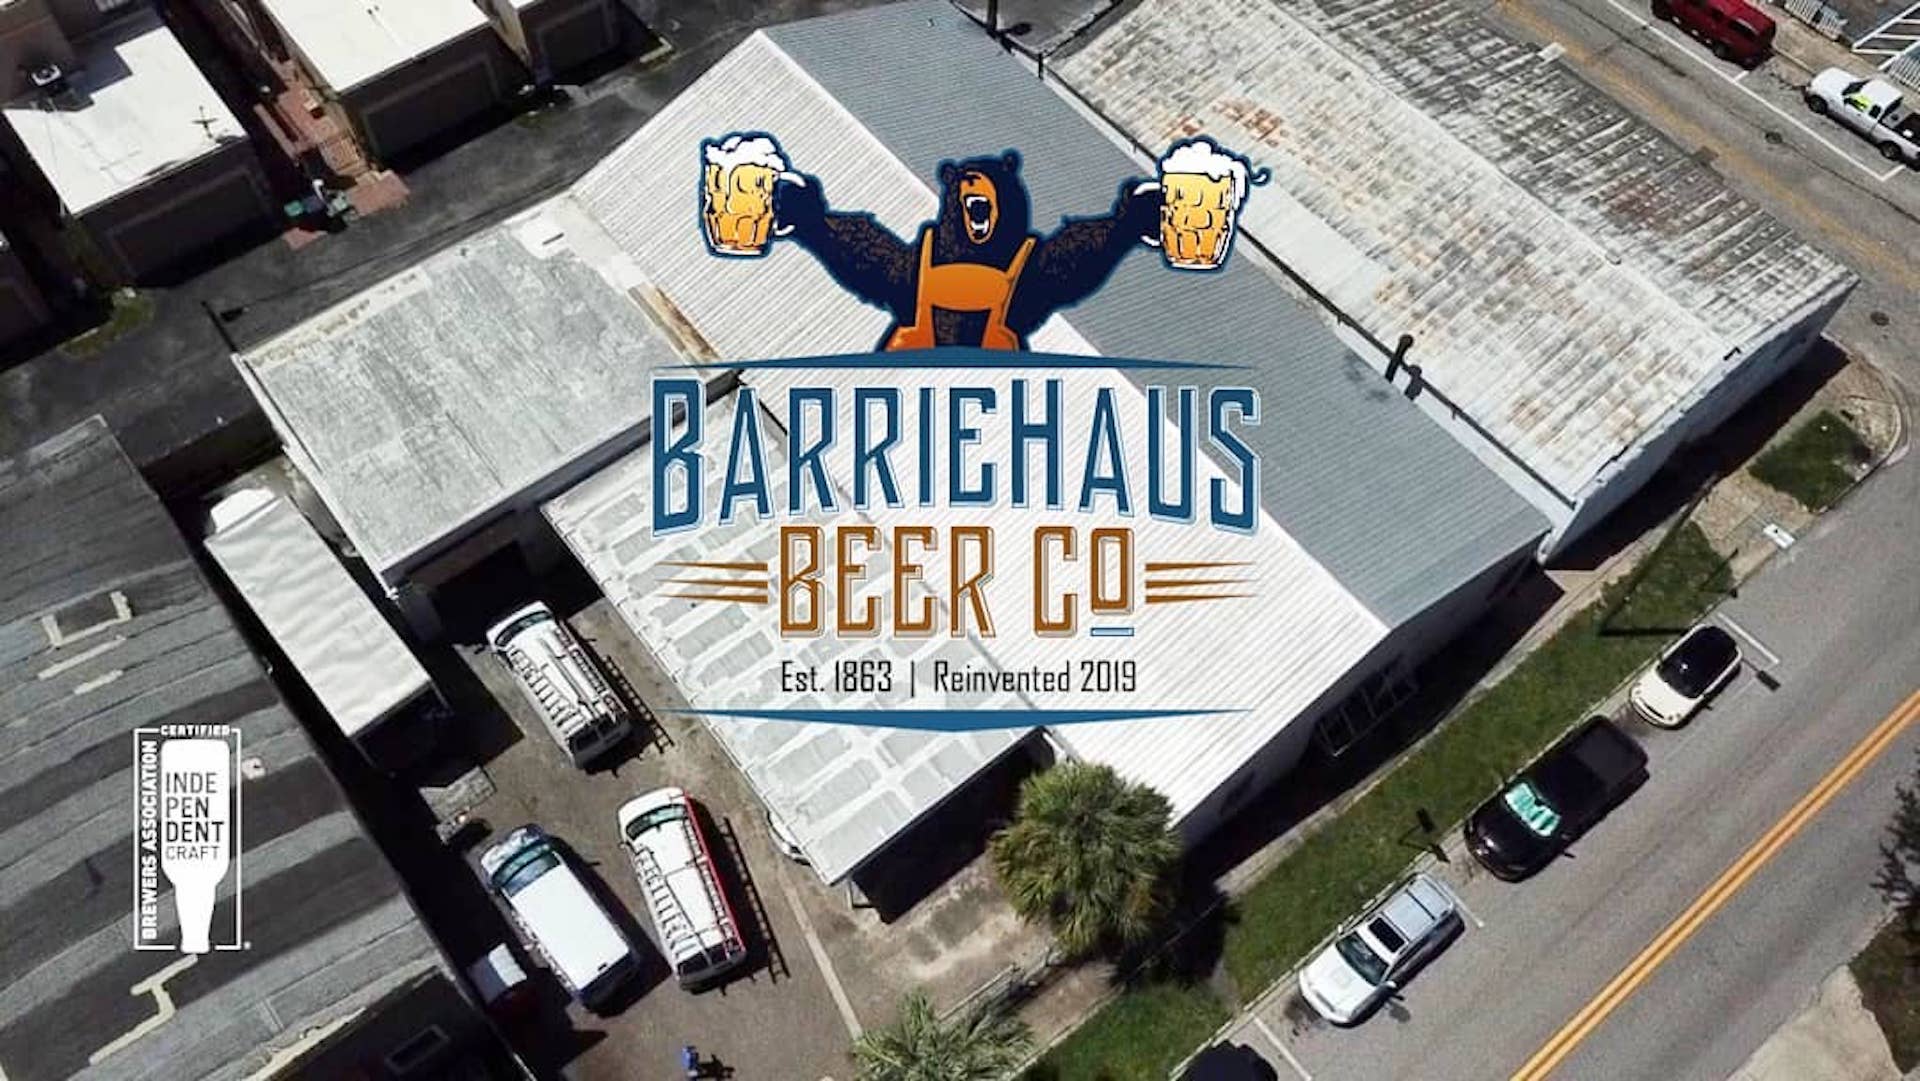 BarrieHaus Beer Co. opening soon in Historic Ybor City